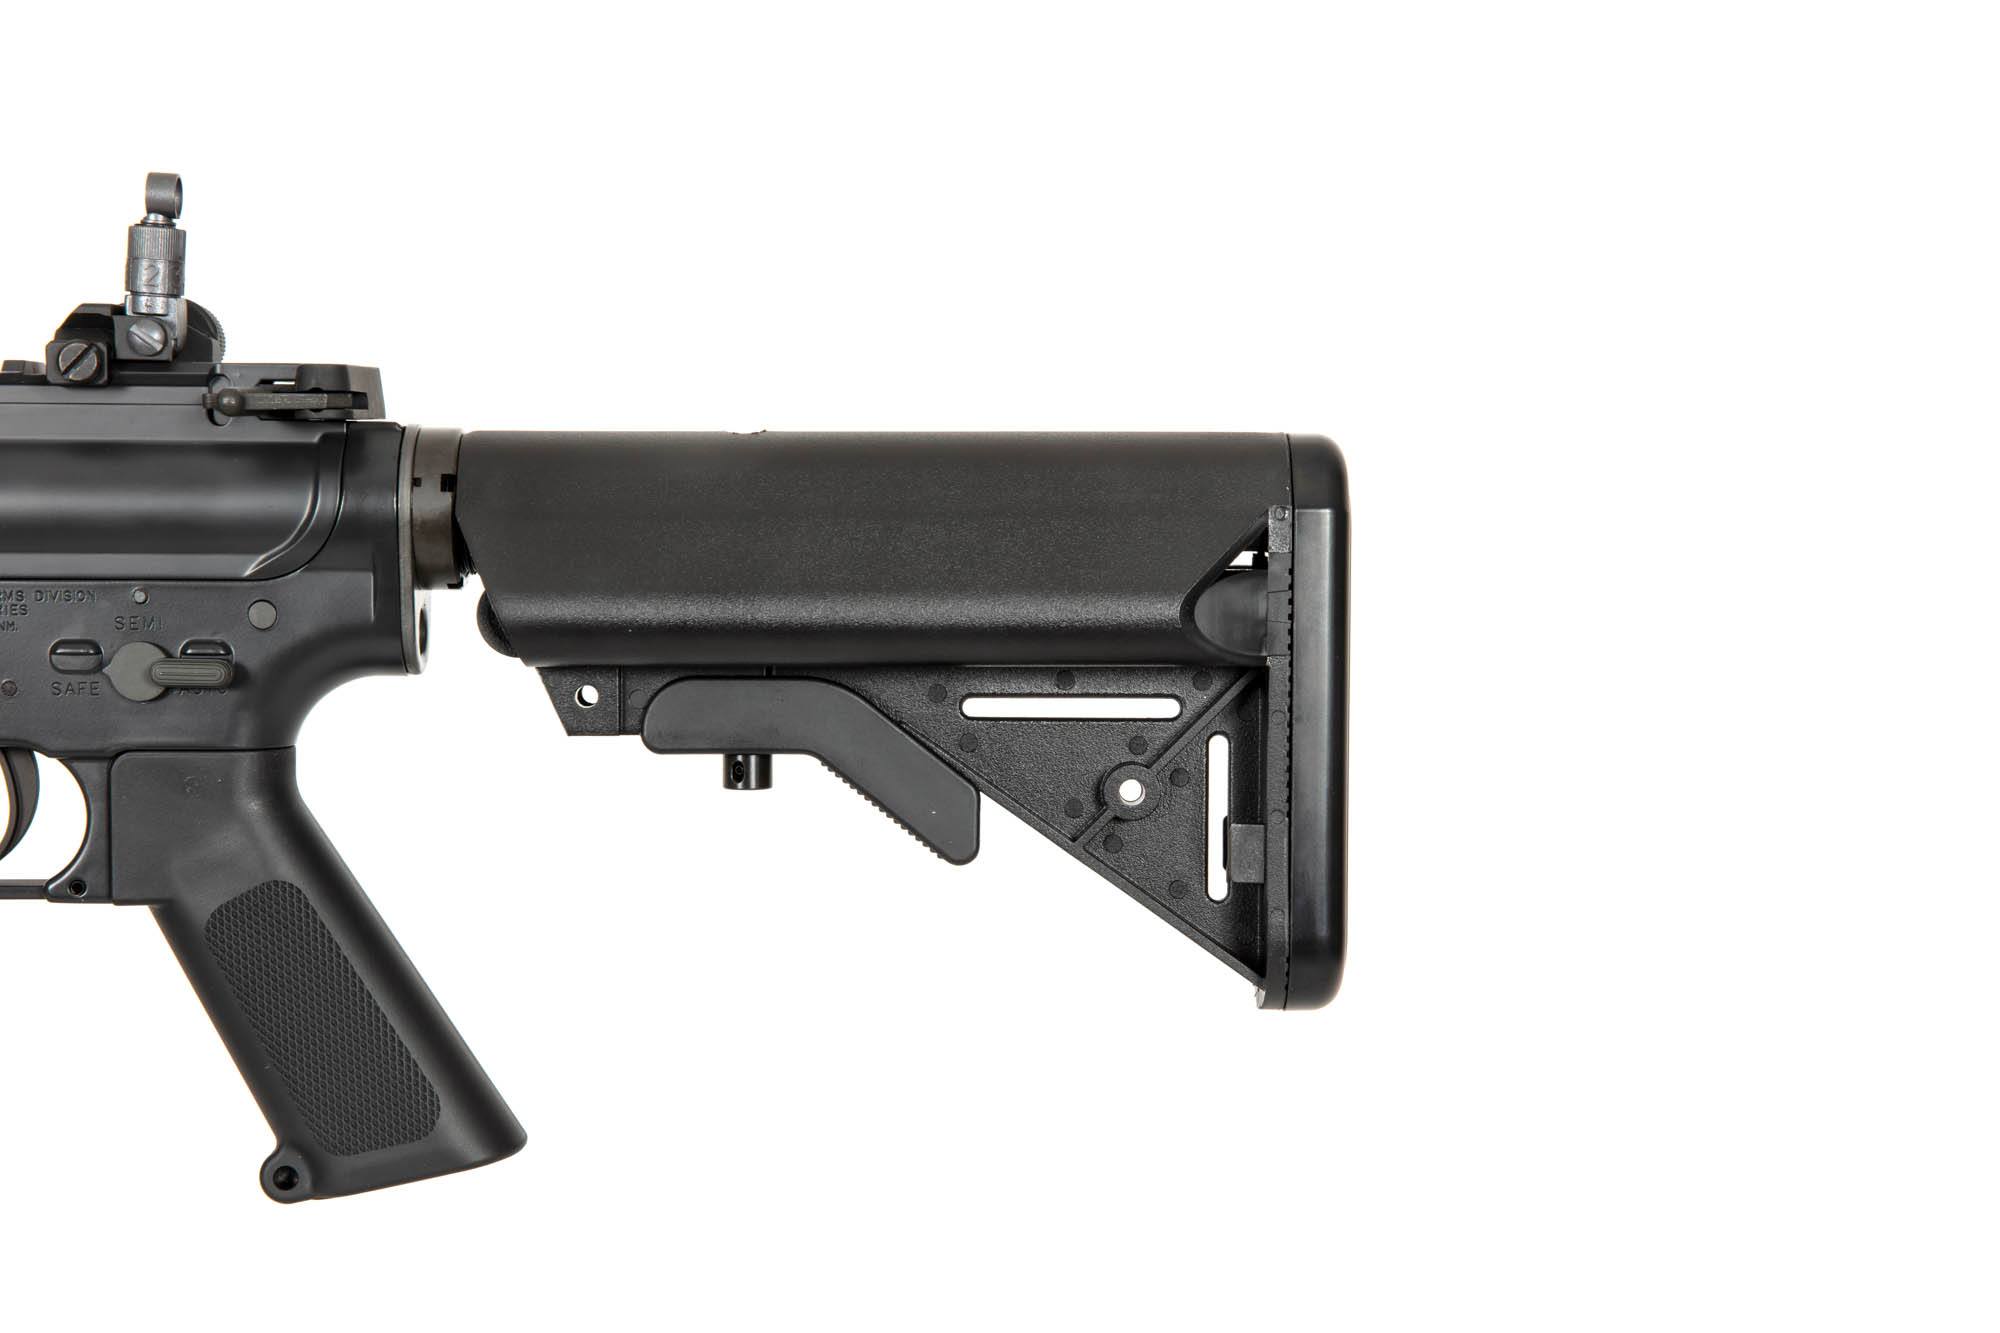 VF1-LMK12M1 (Colt MK12 MOD 1) Carbine Replica by VFC on Airsoft Mania Europe